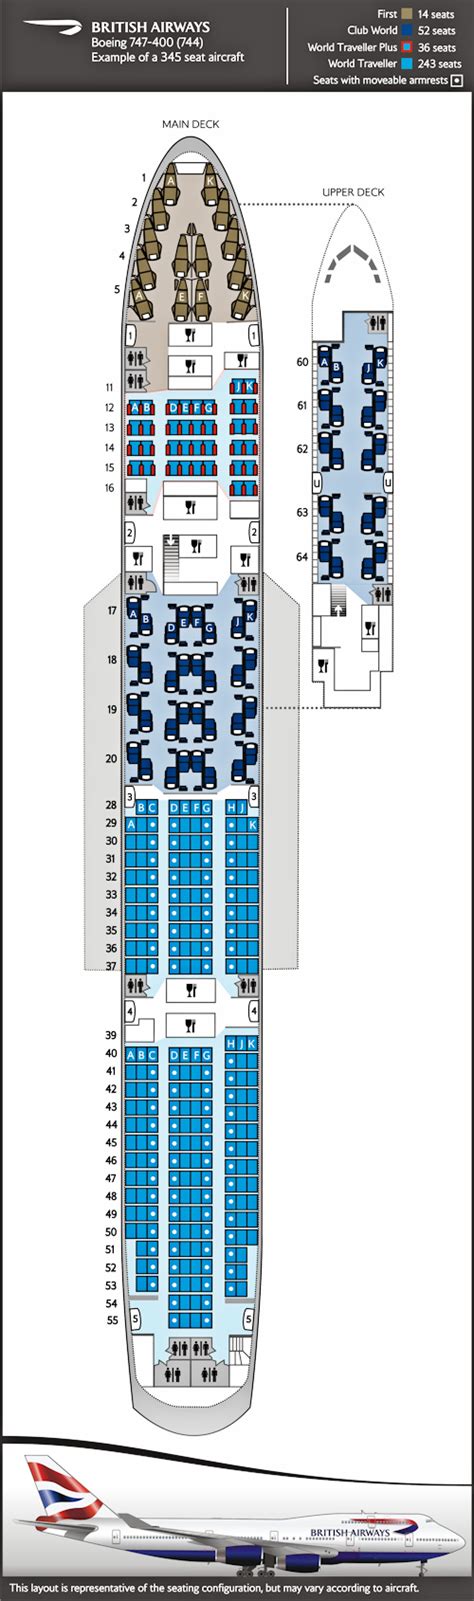 Ba 744 Seat Map